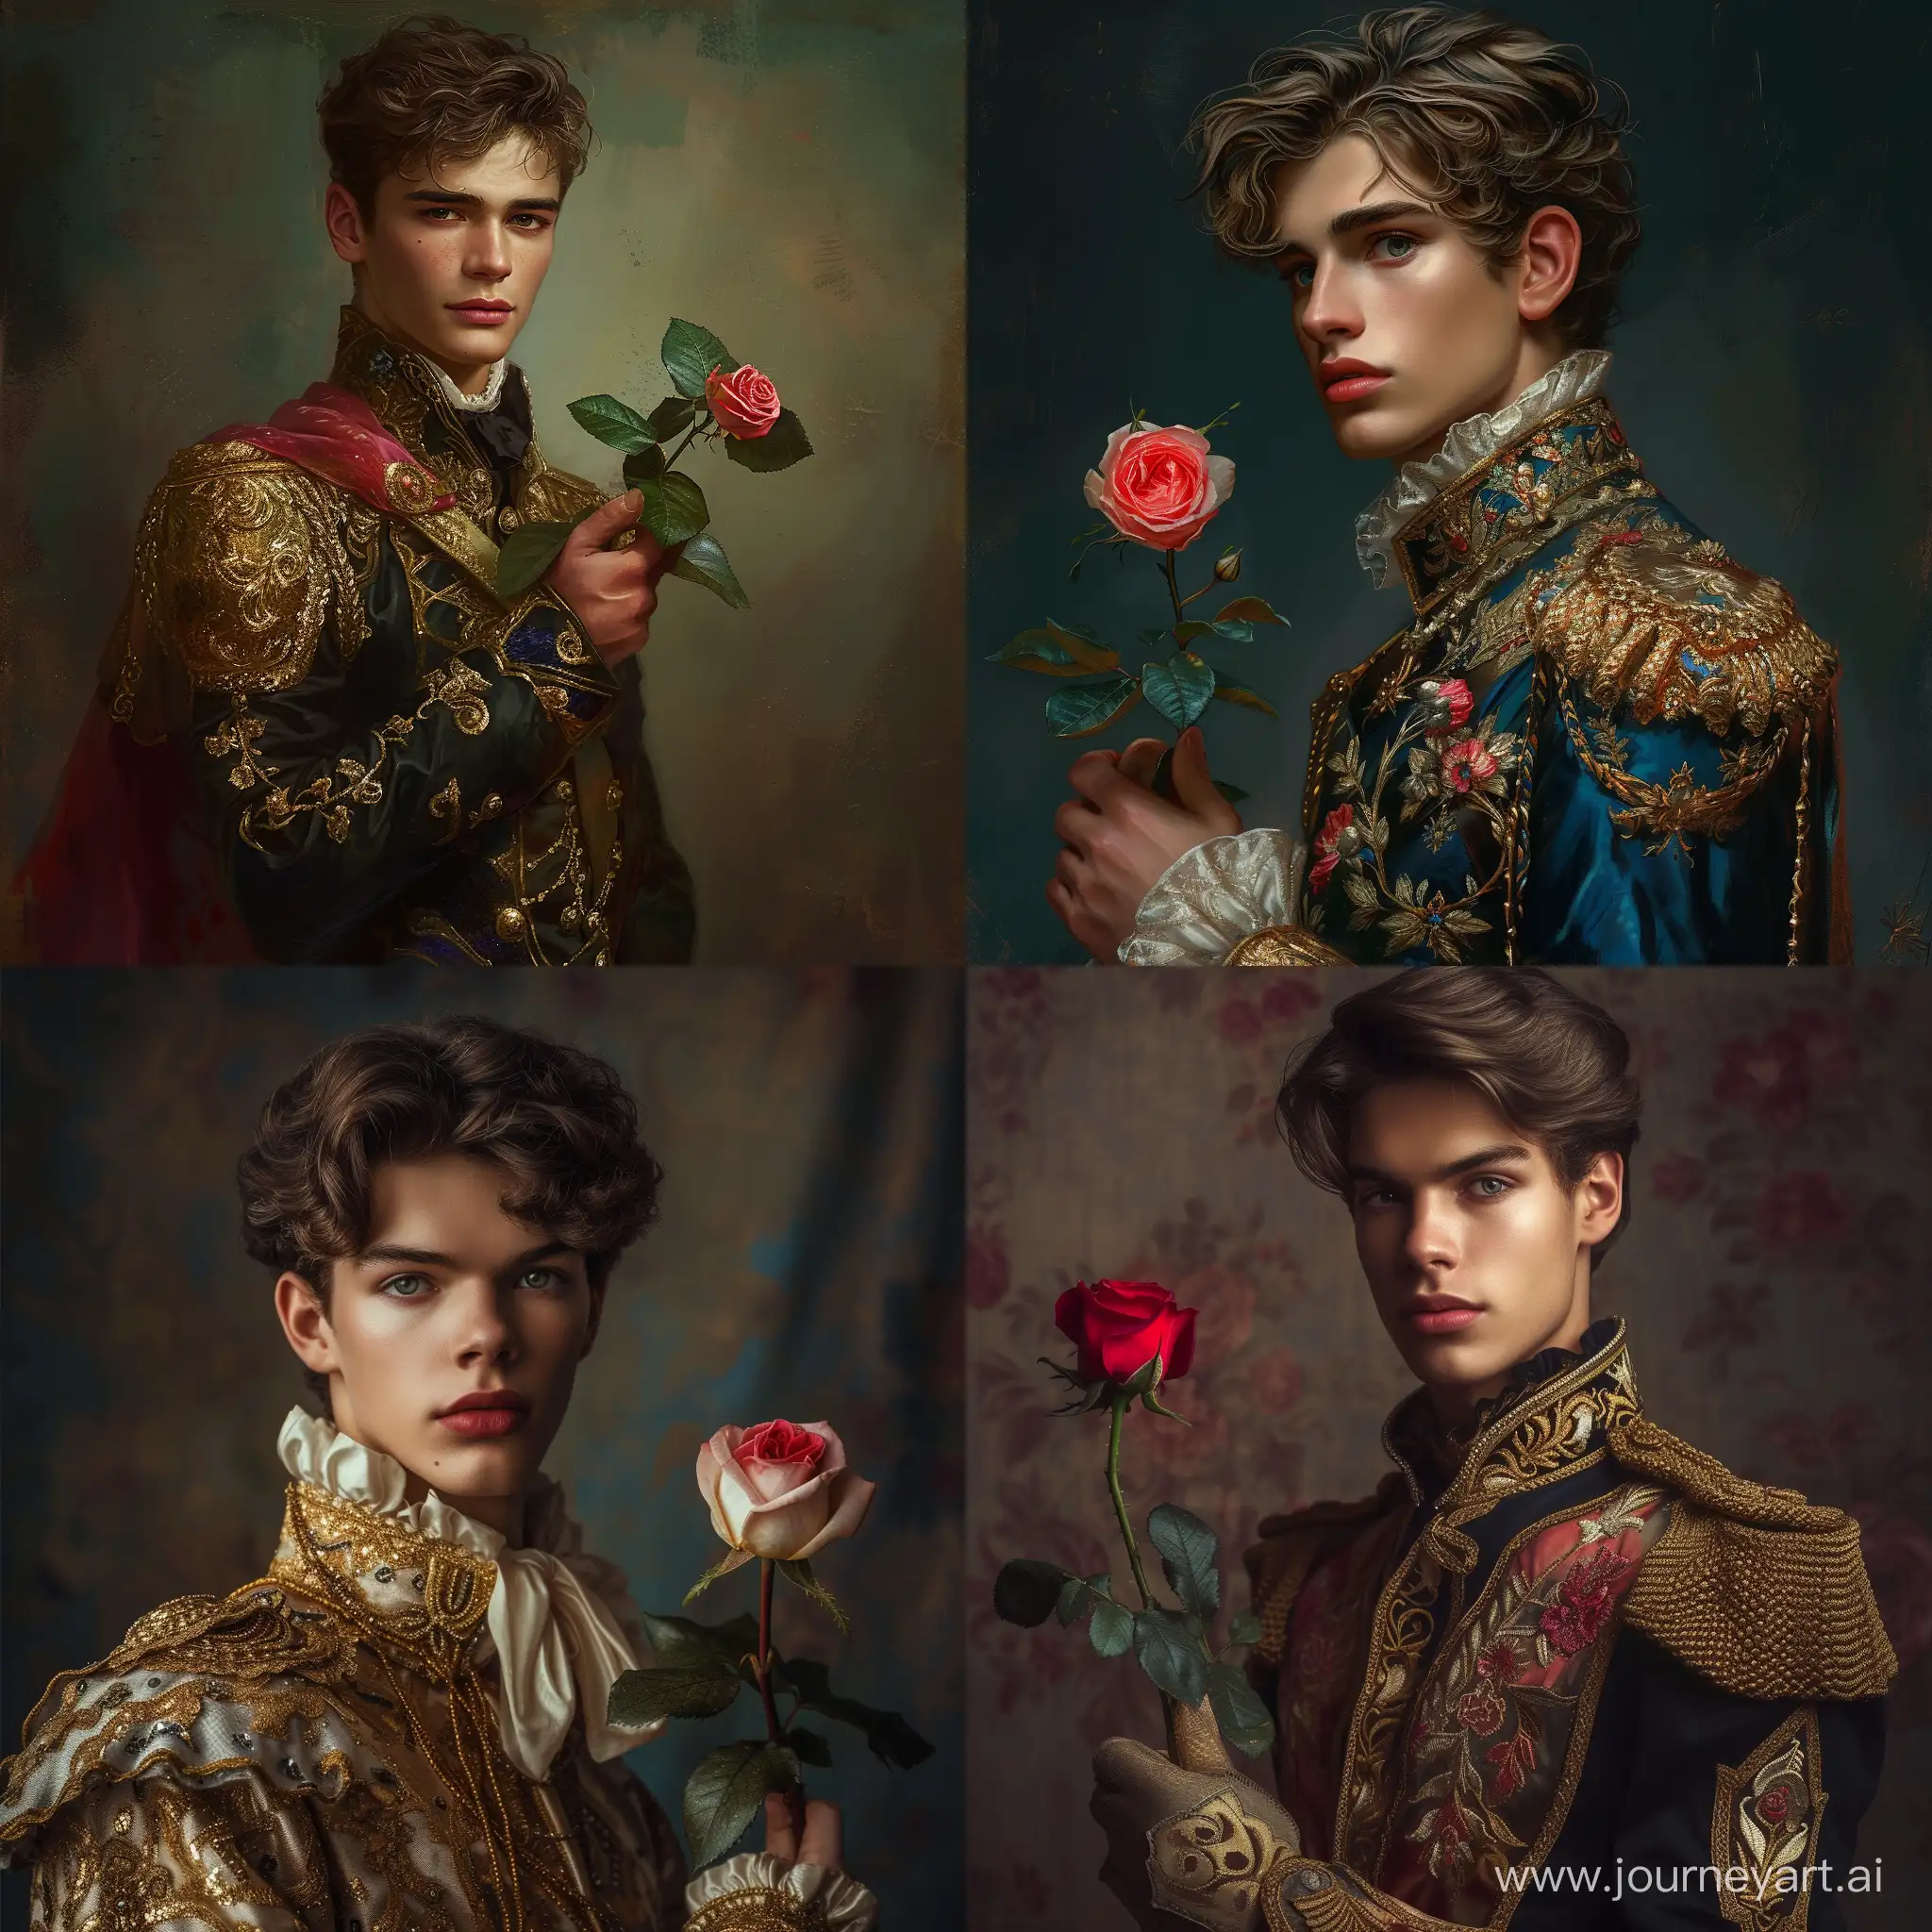 Elegant-20YearOld-Prince-Holding-a-Rose-Royal-Portrait